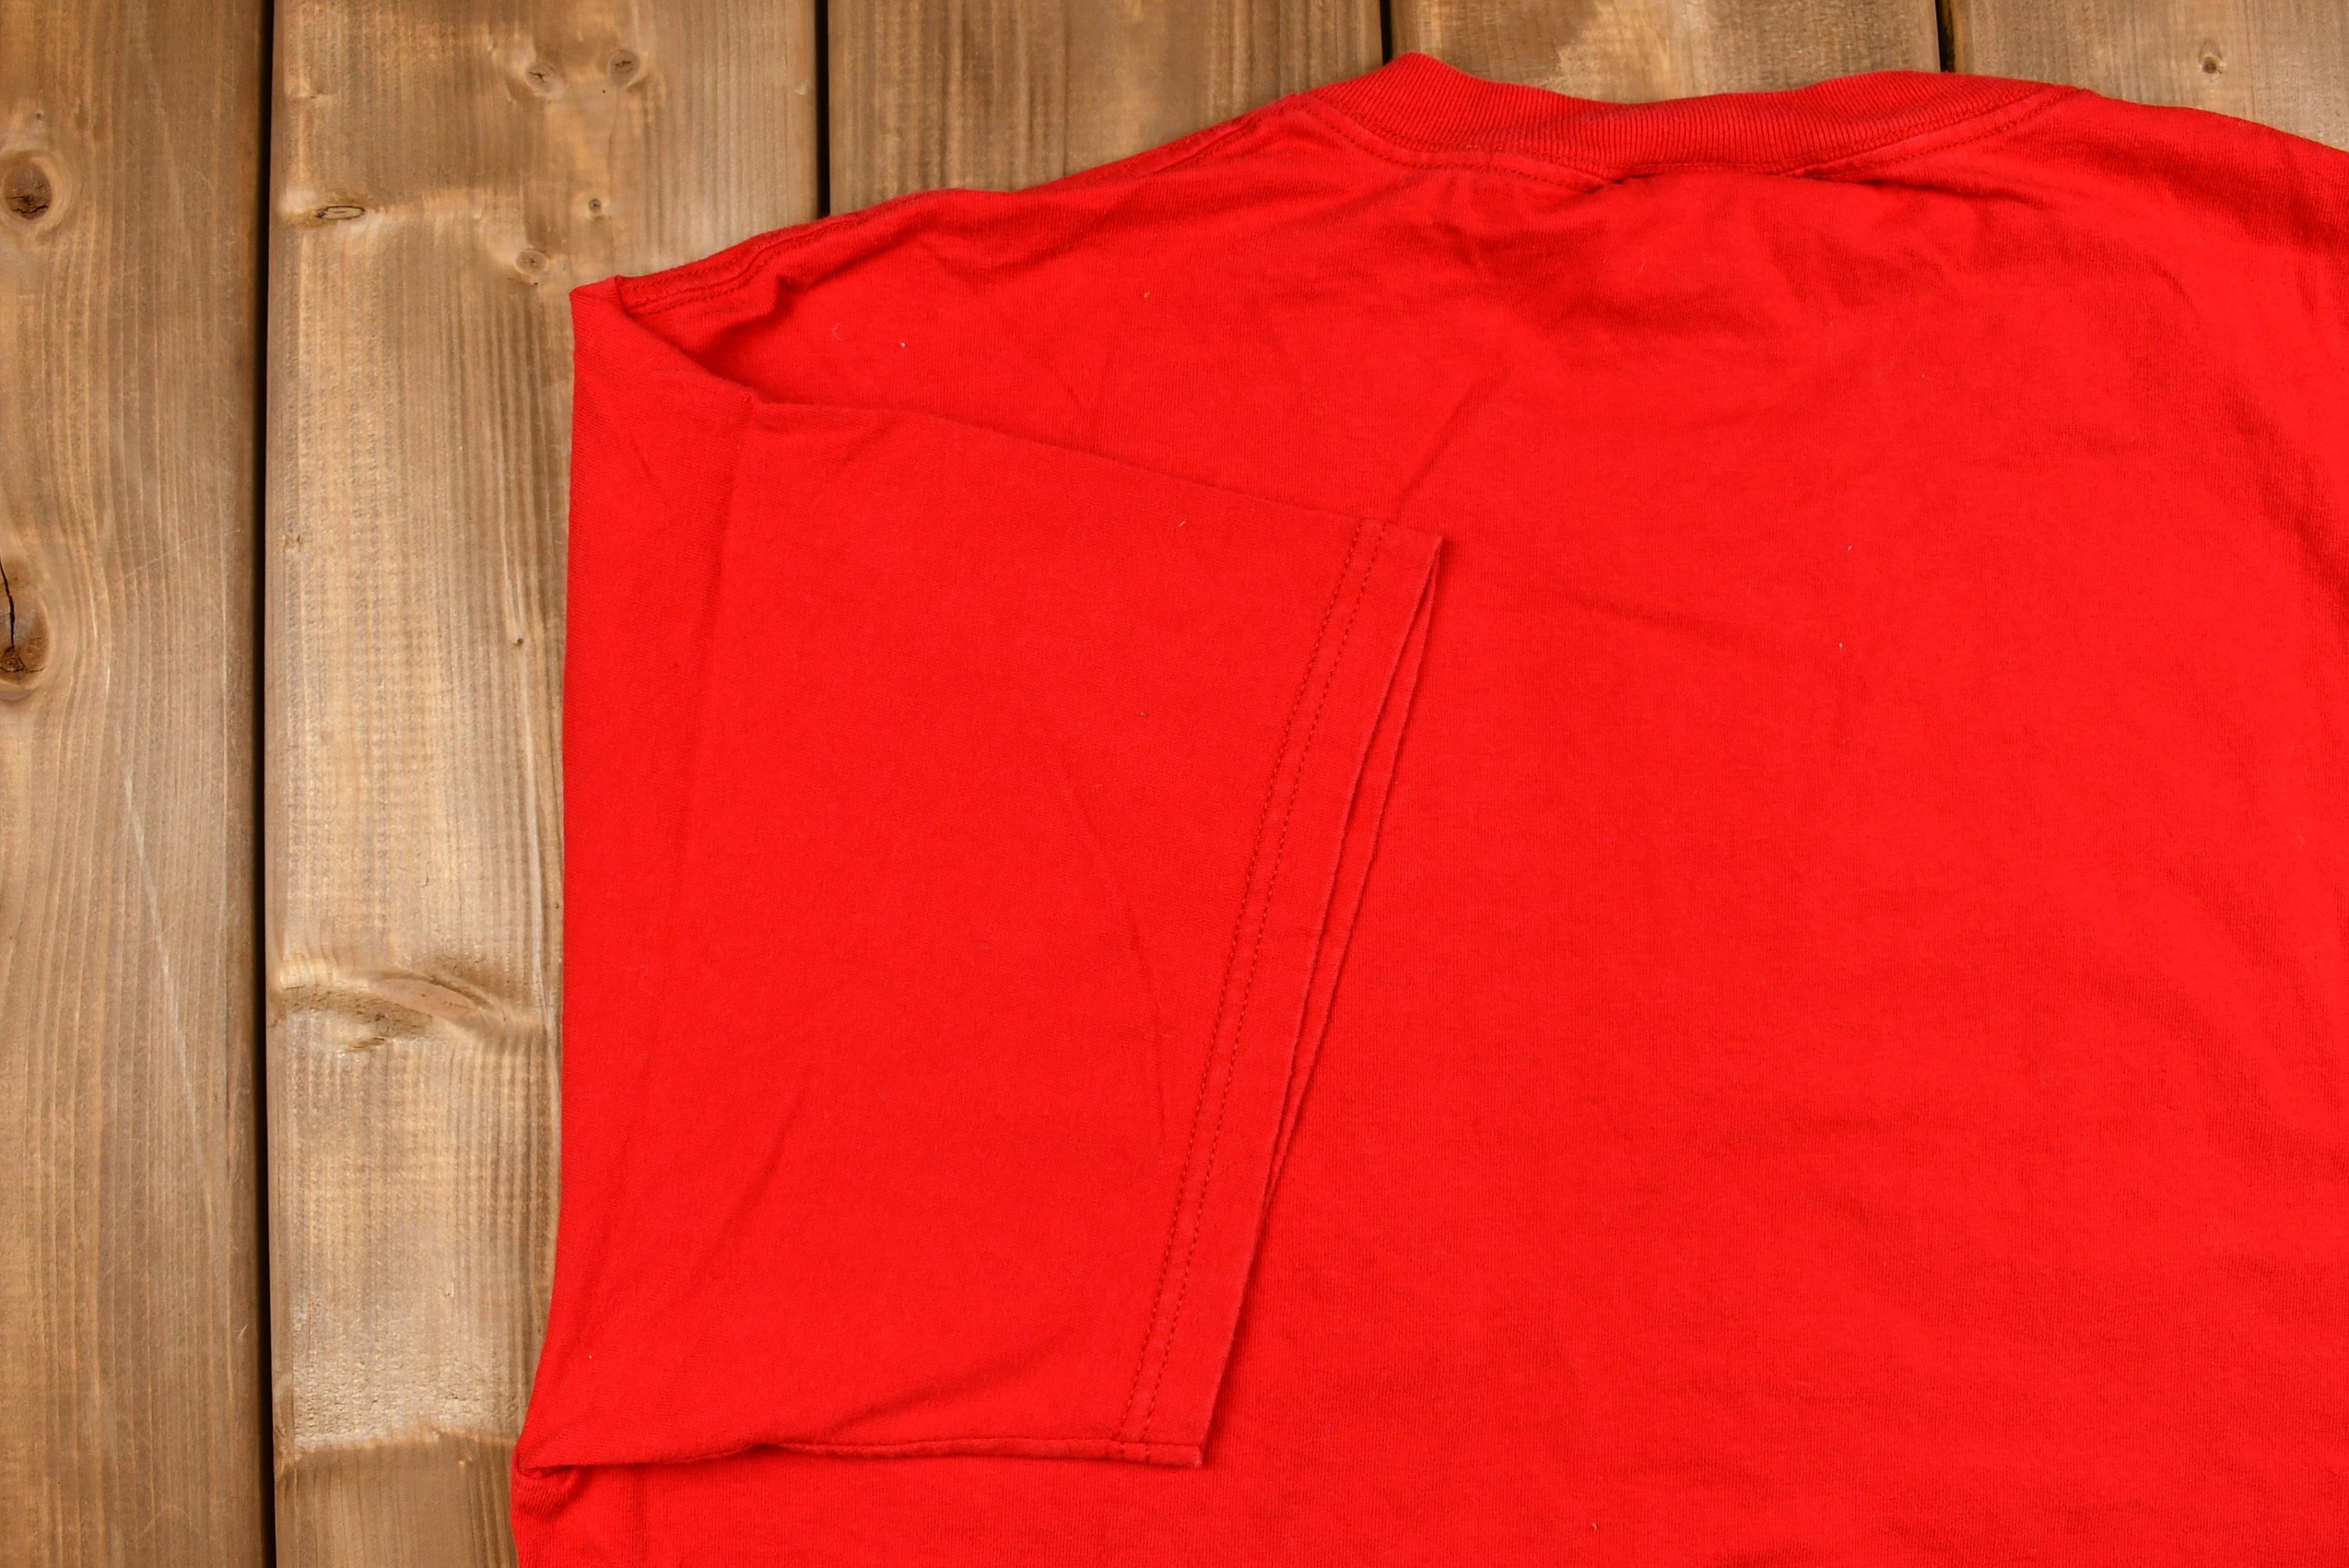 Vintage Starter - Detroit Red Wings T-Shirt 1992 X-Large